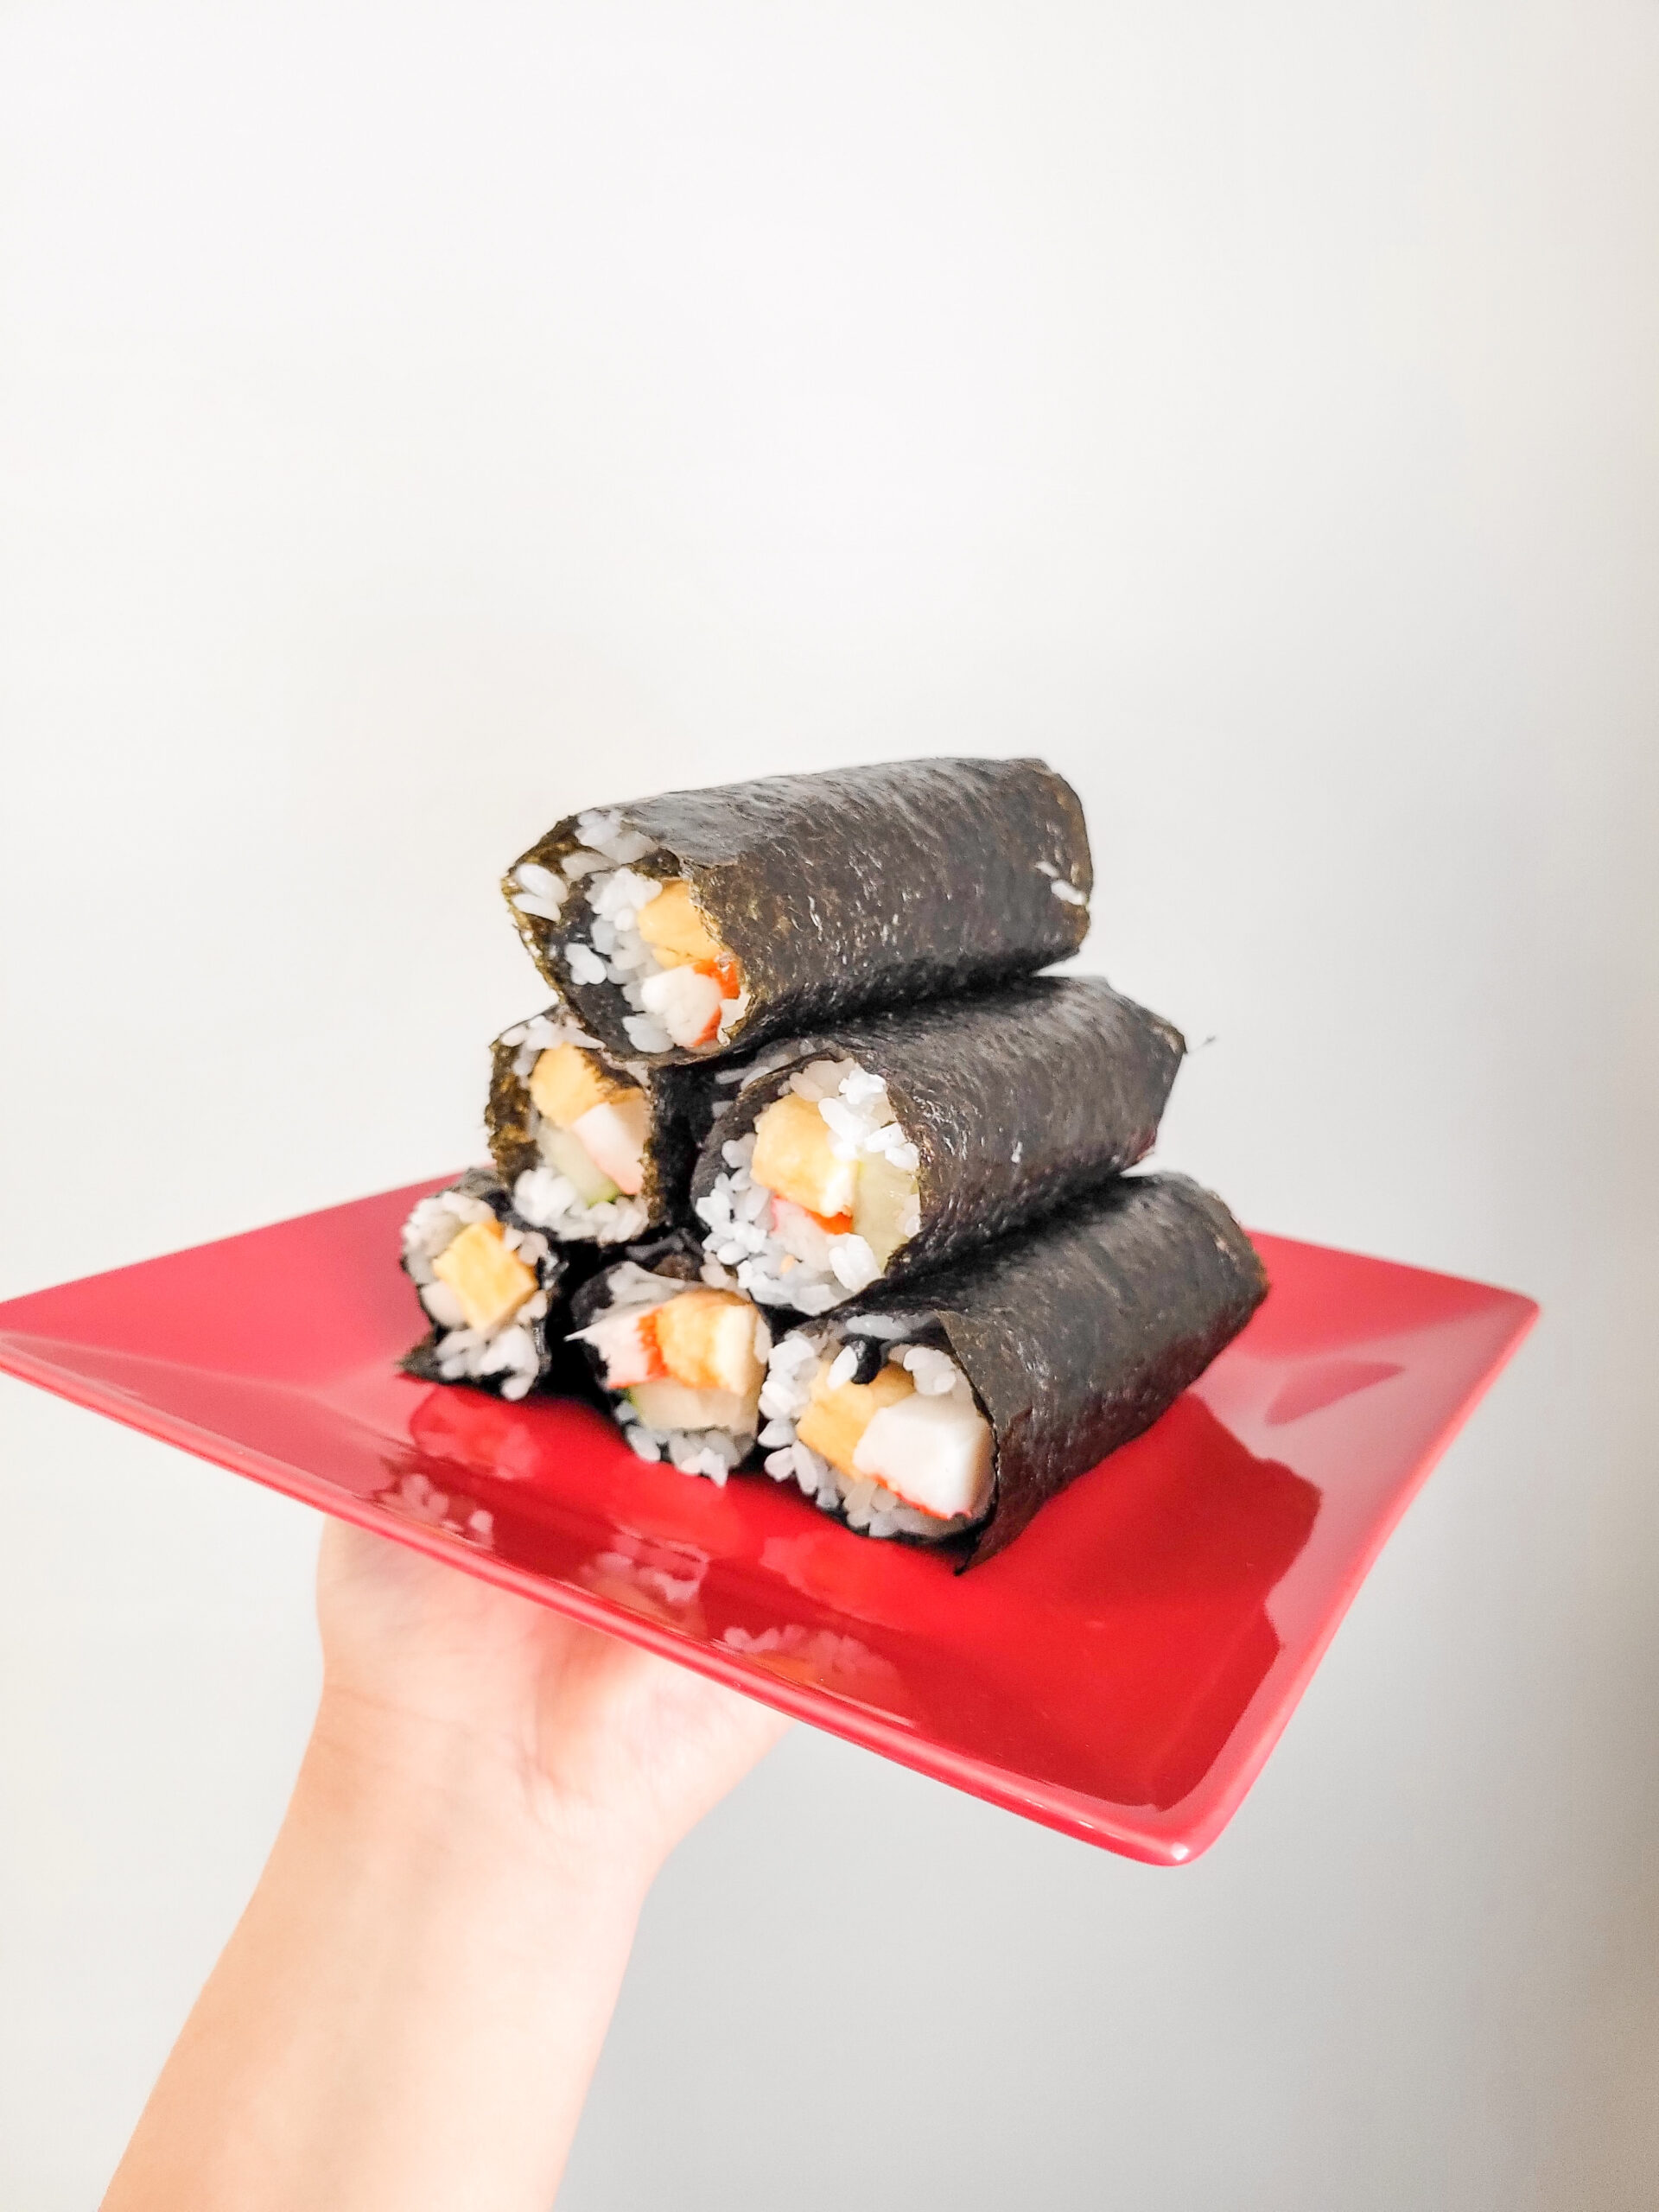 Eho-maki sushi rolls